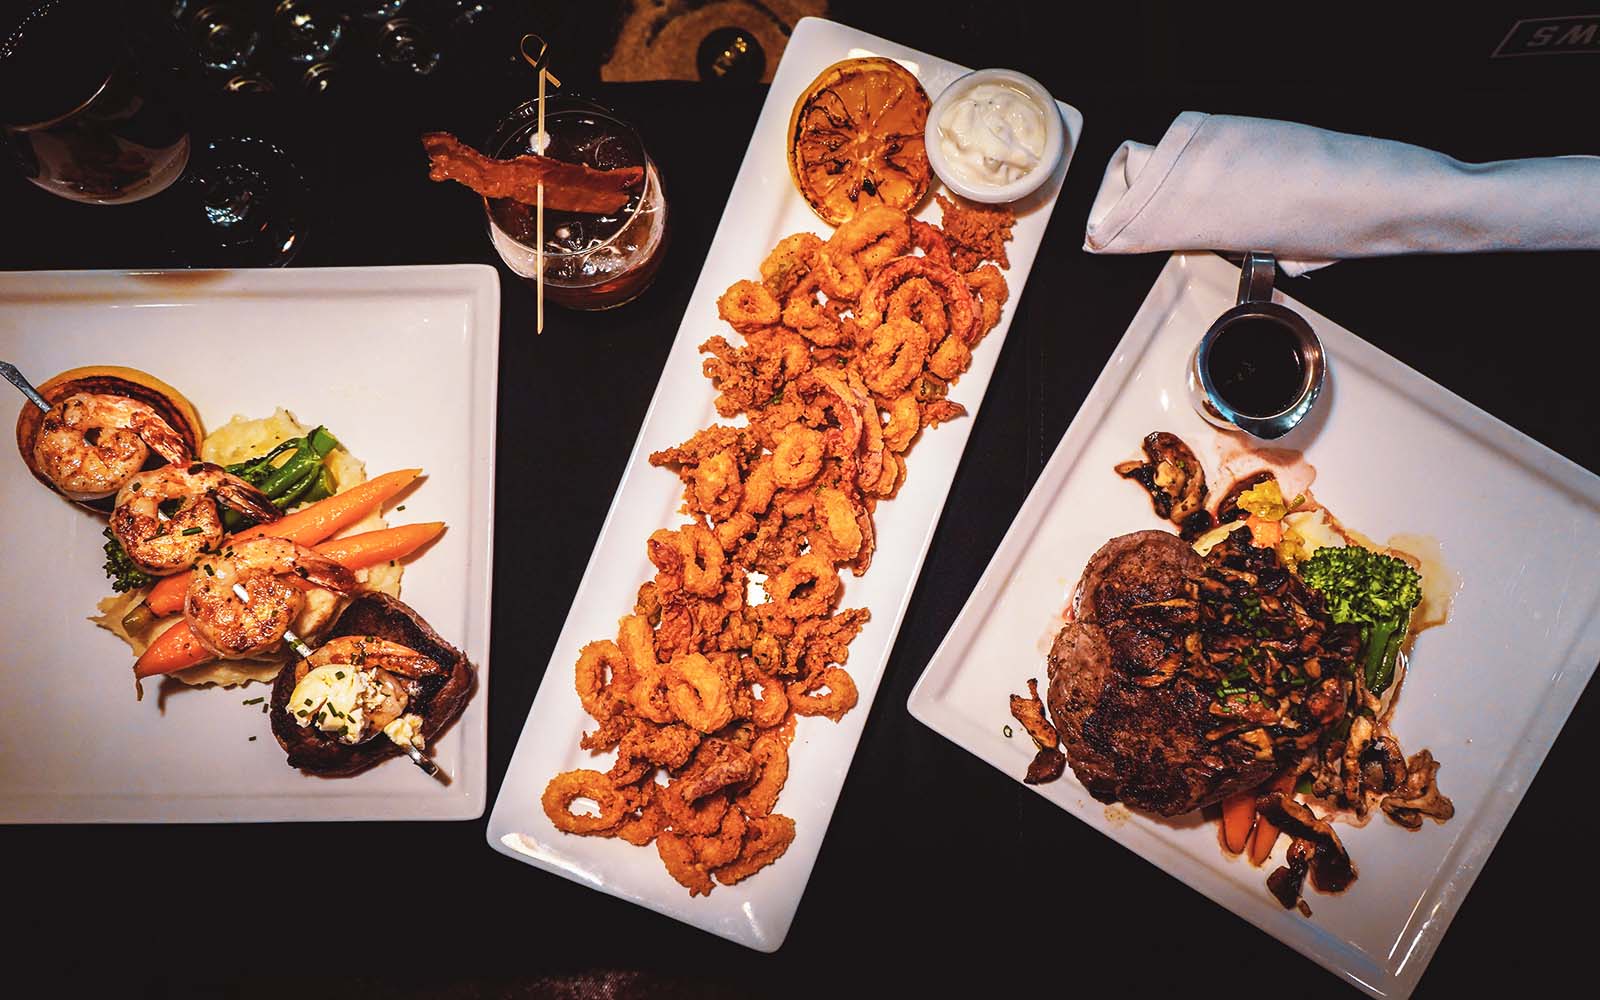 Table set with plated food including shrimp skewer, calamari and shrimp.